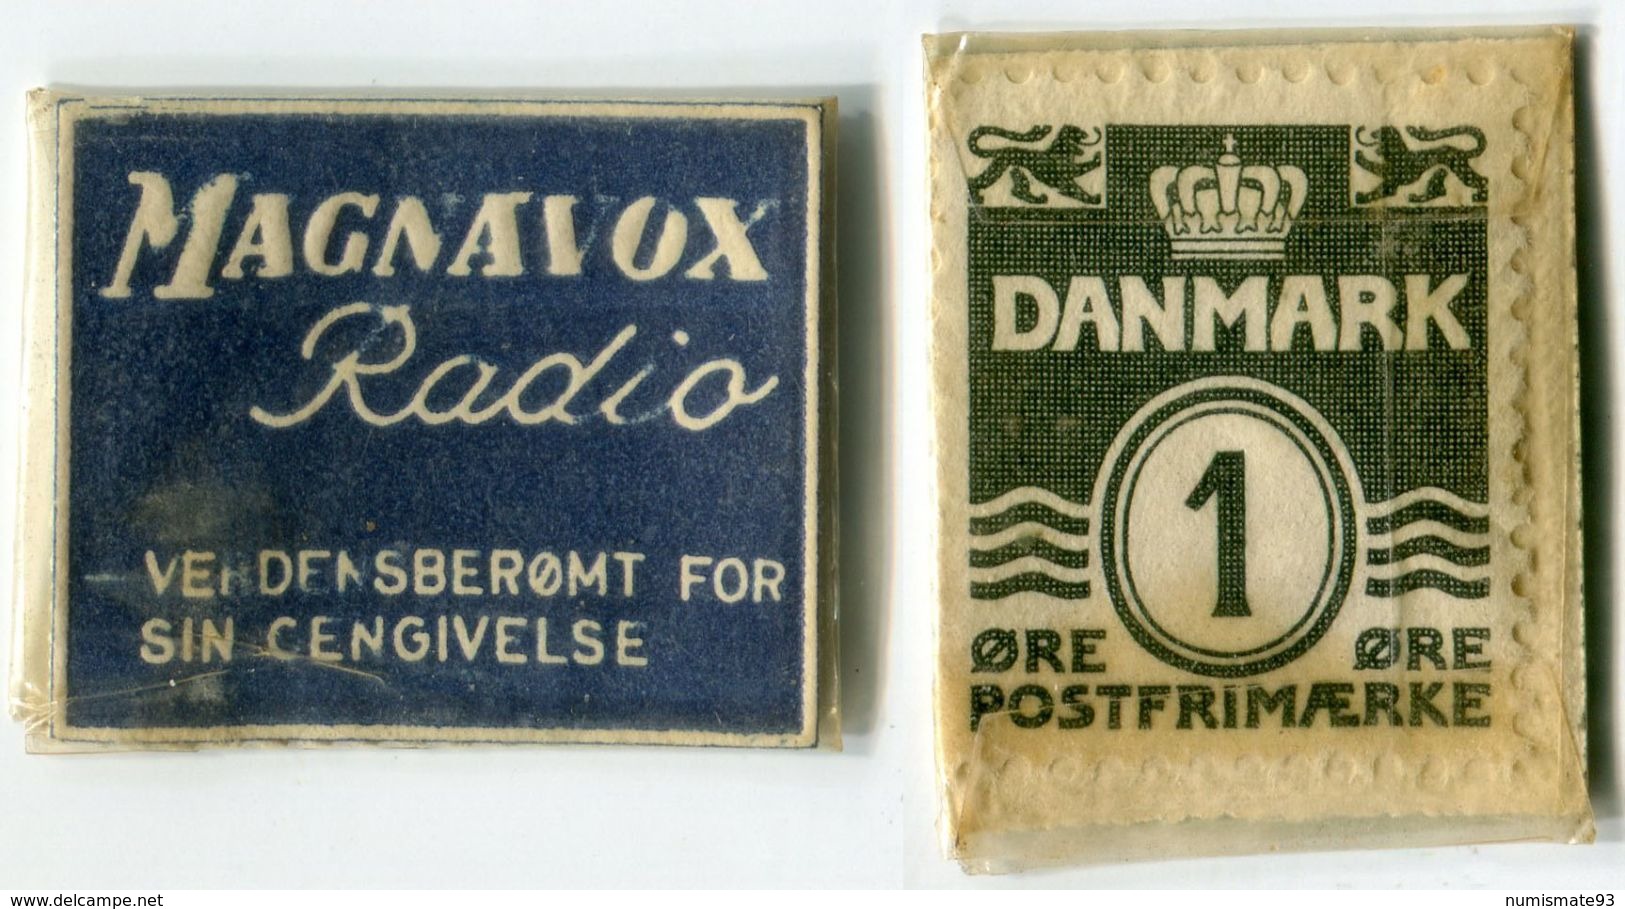 N93-0628 - Timbre-monnaie - Danemark - Magnavox Radio - 1 Ore - Kapselgeld - Encased Stamp - Monetary /of Necessity